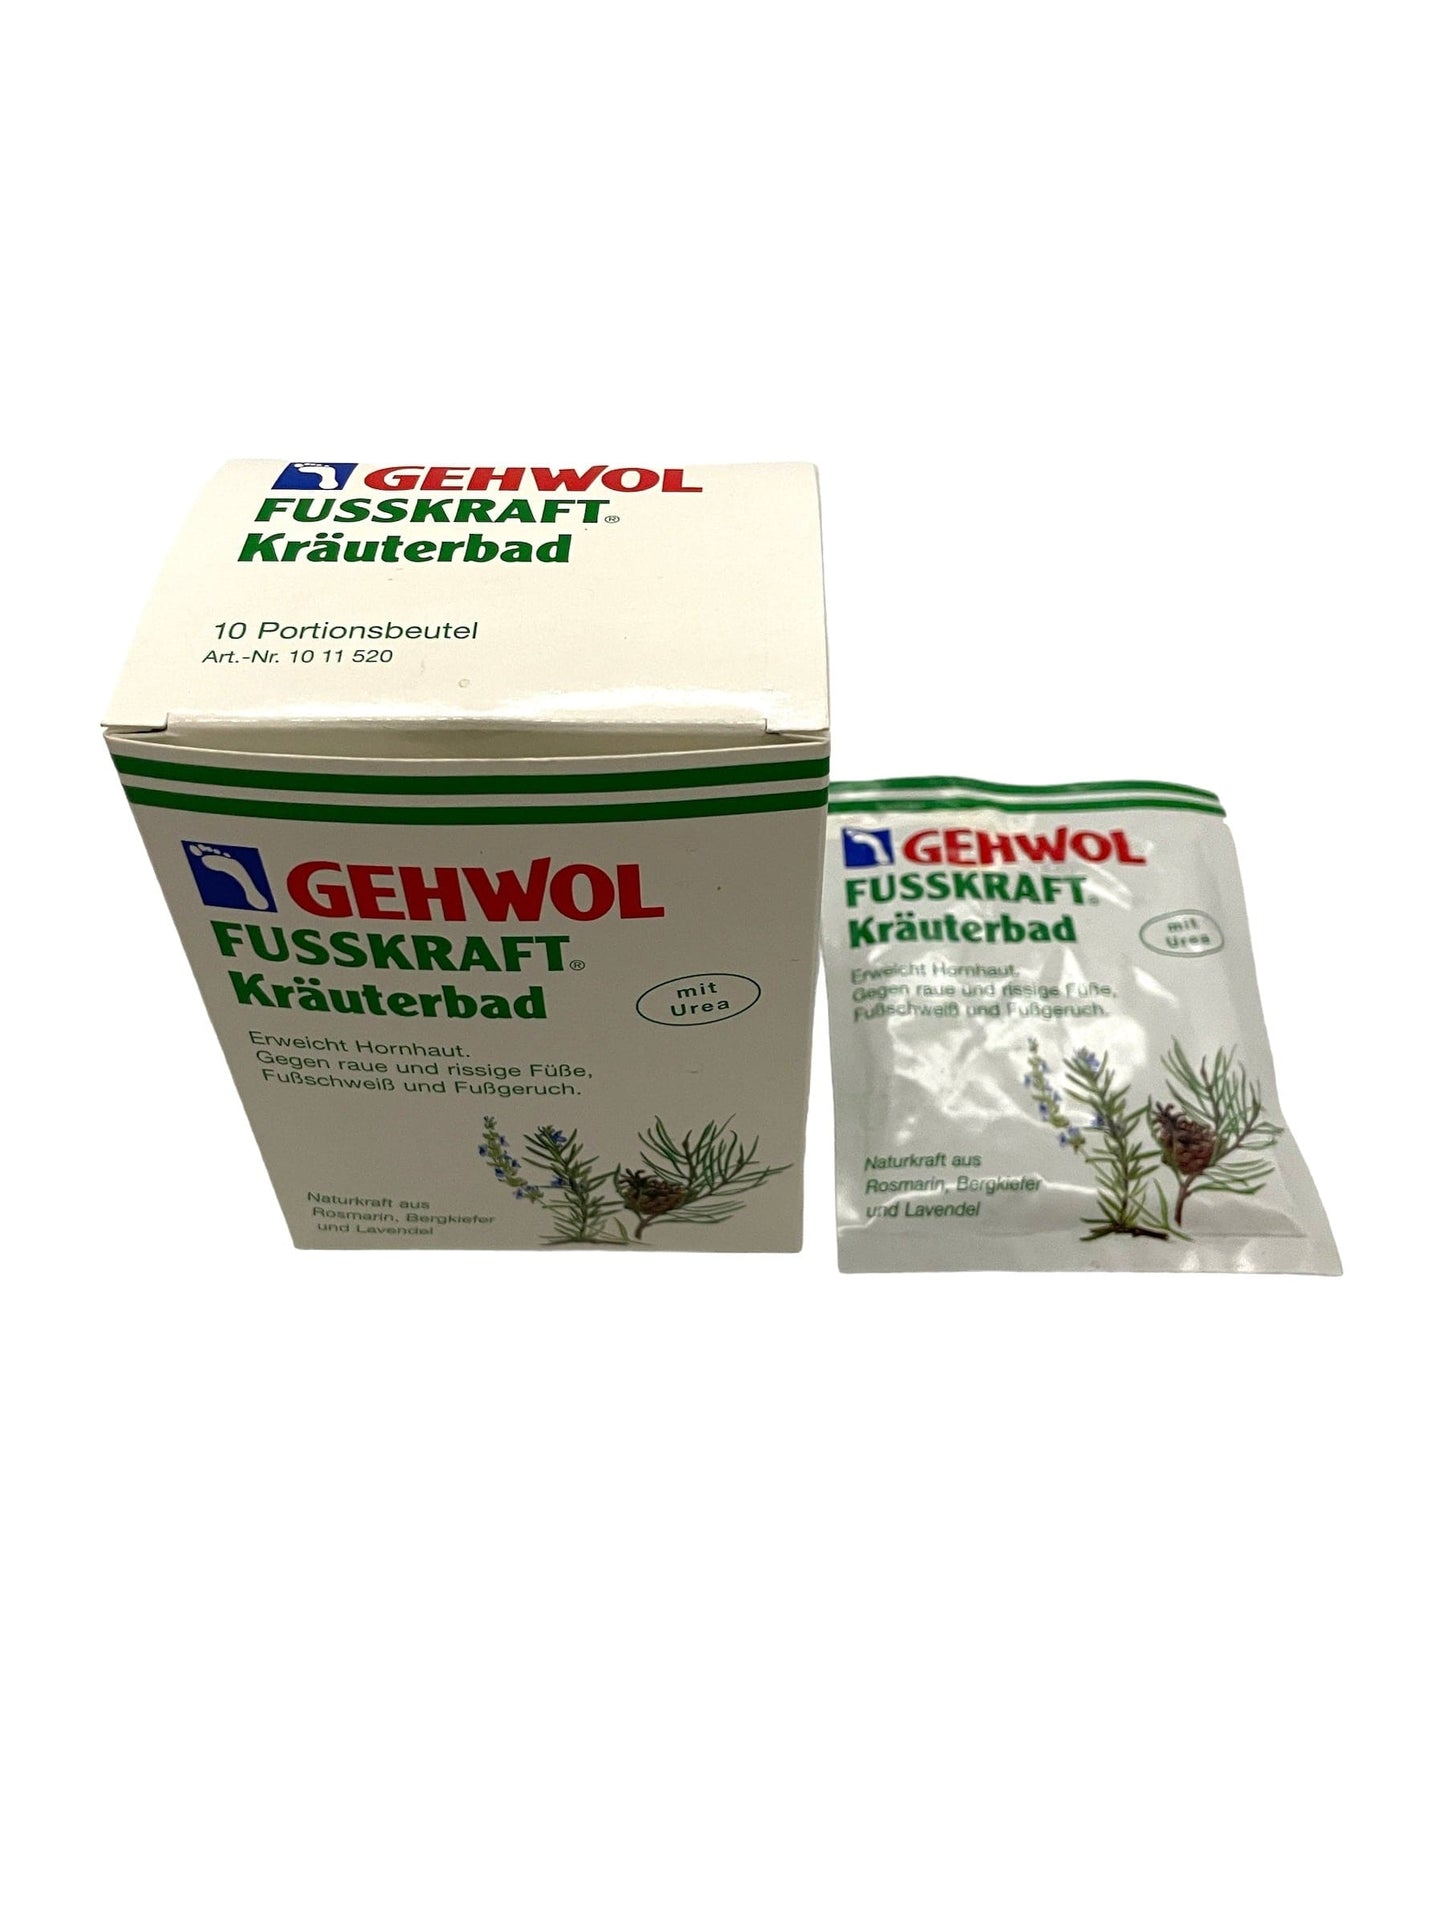 Gehowl Green Herbal Foot Bath Fusskraft Krauterbad 10 Packet Foot bath